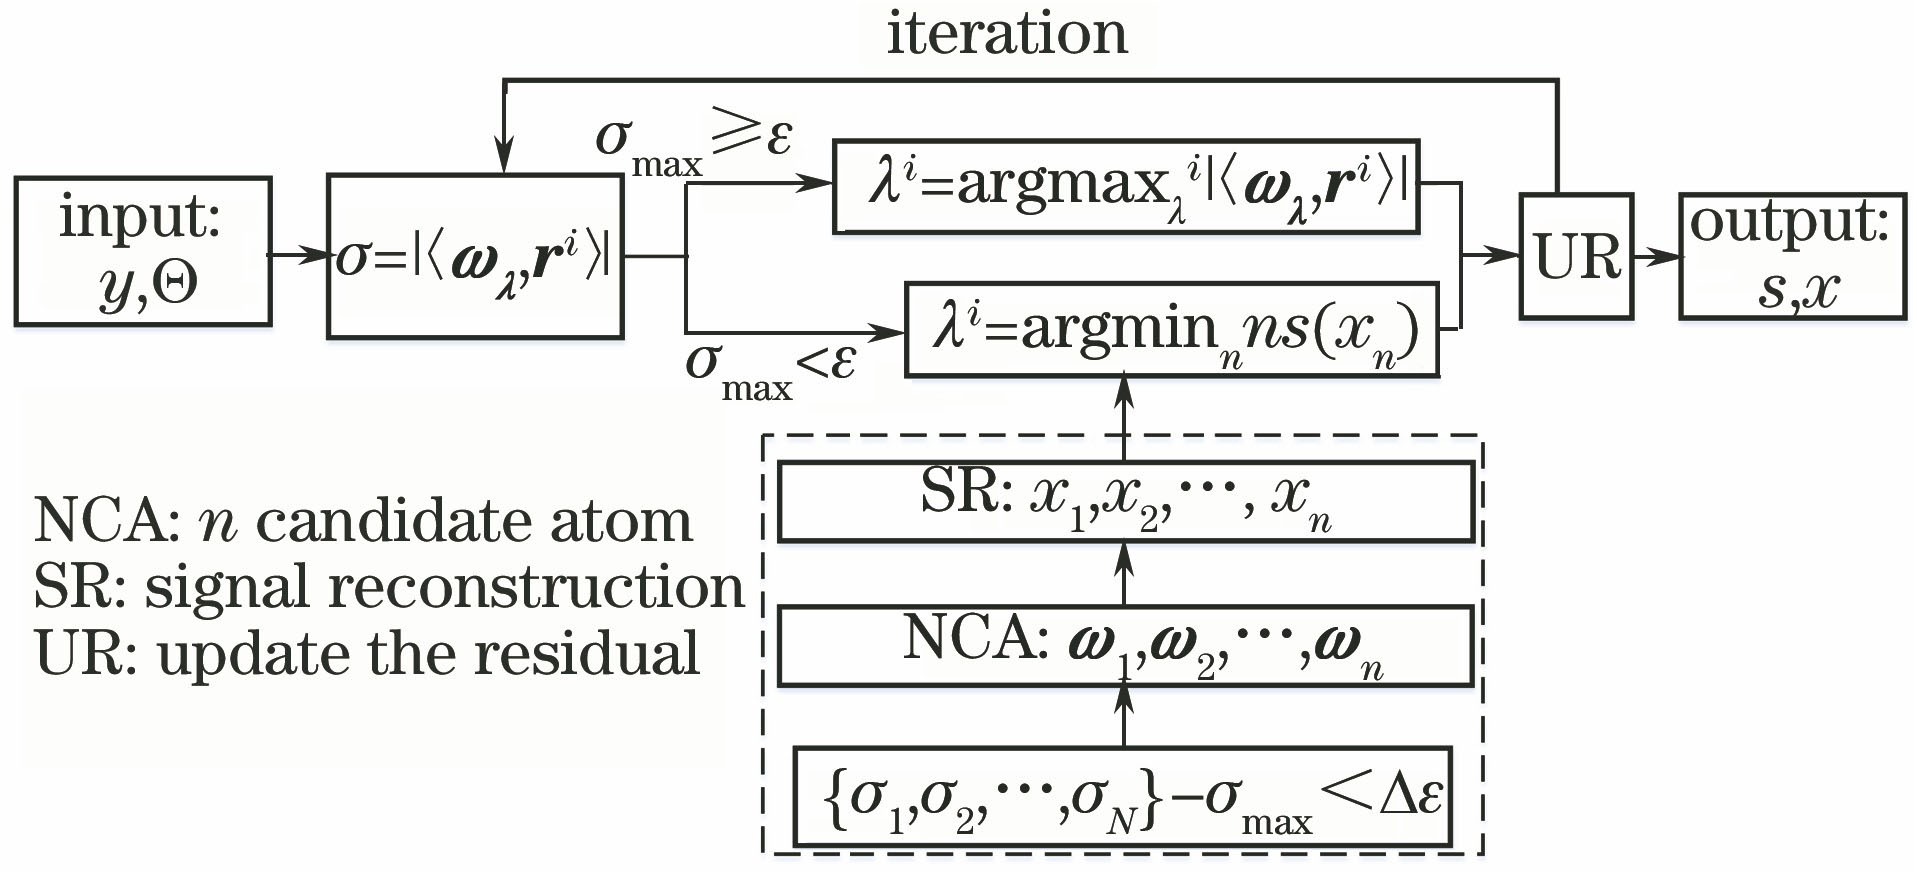 Flowchart of NSGI algorithm